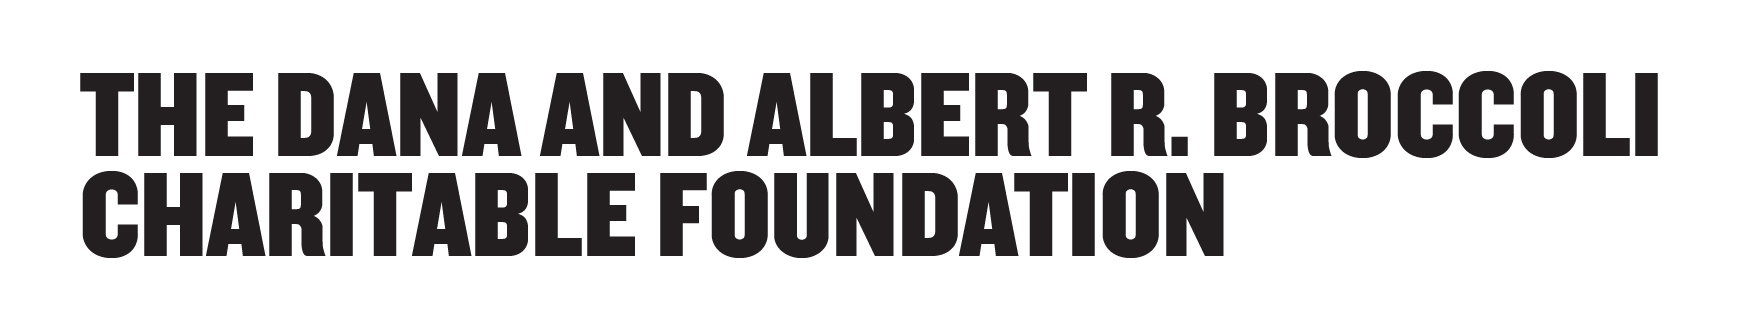 The Dana and Albert R. Broccoli Charitable Foundation